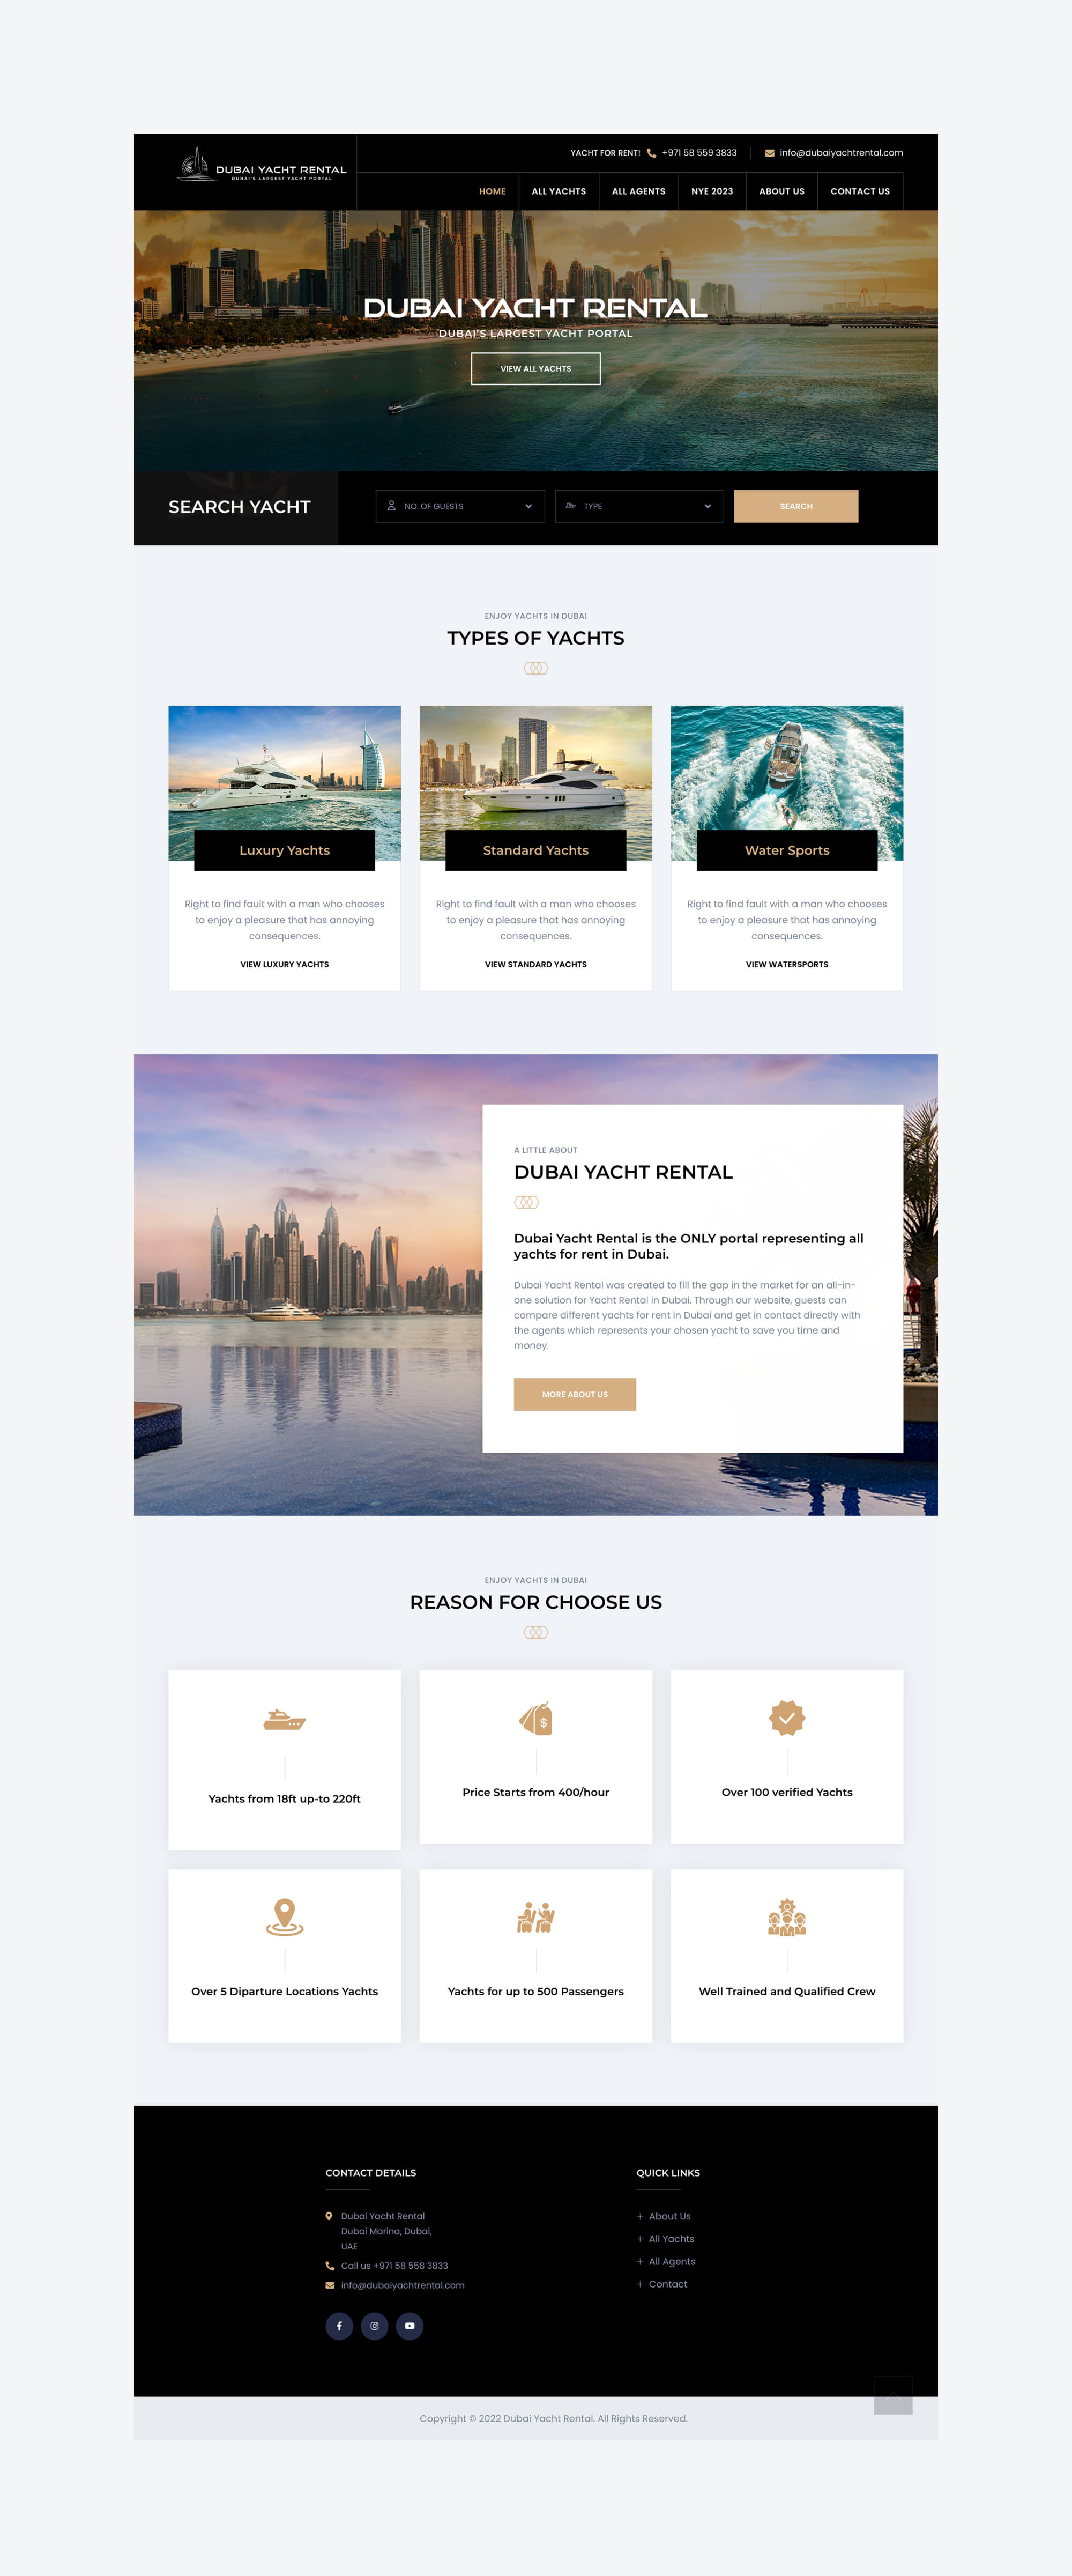 Dubai Yacht Rental website by freelance web designer Sajid Sulaiman